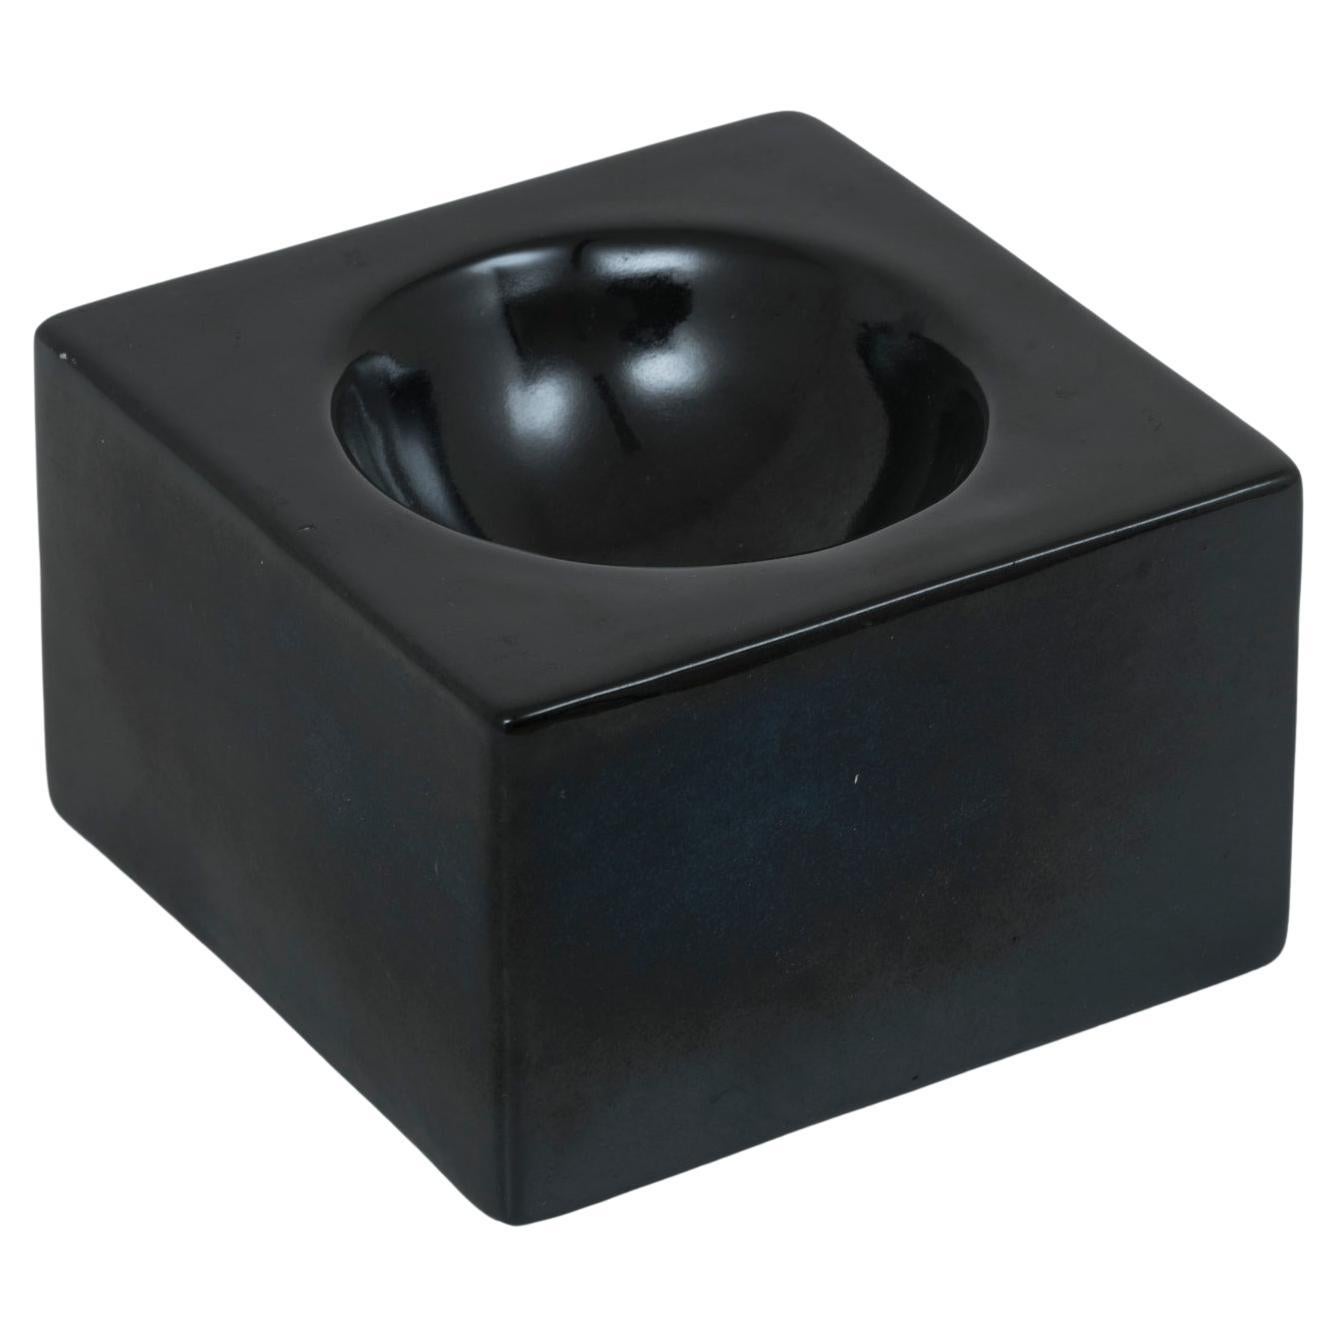 Black Model 444 Ceramic Bowl or Ashtray by Ettore Sottsass for Il Sestante 1960s